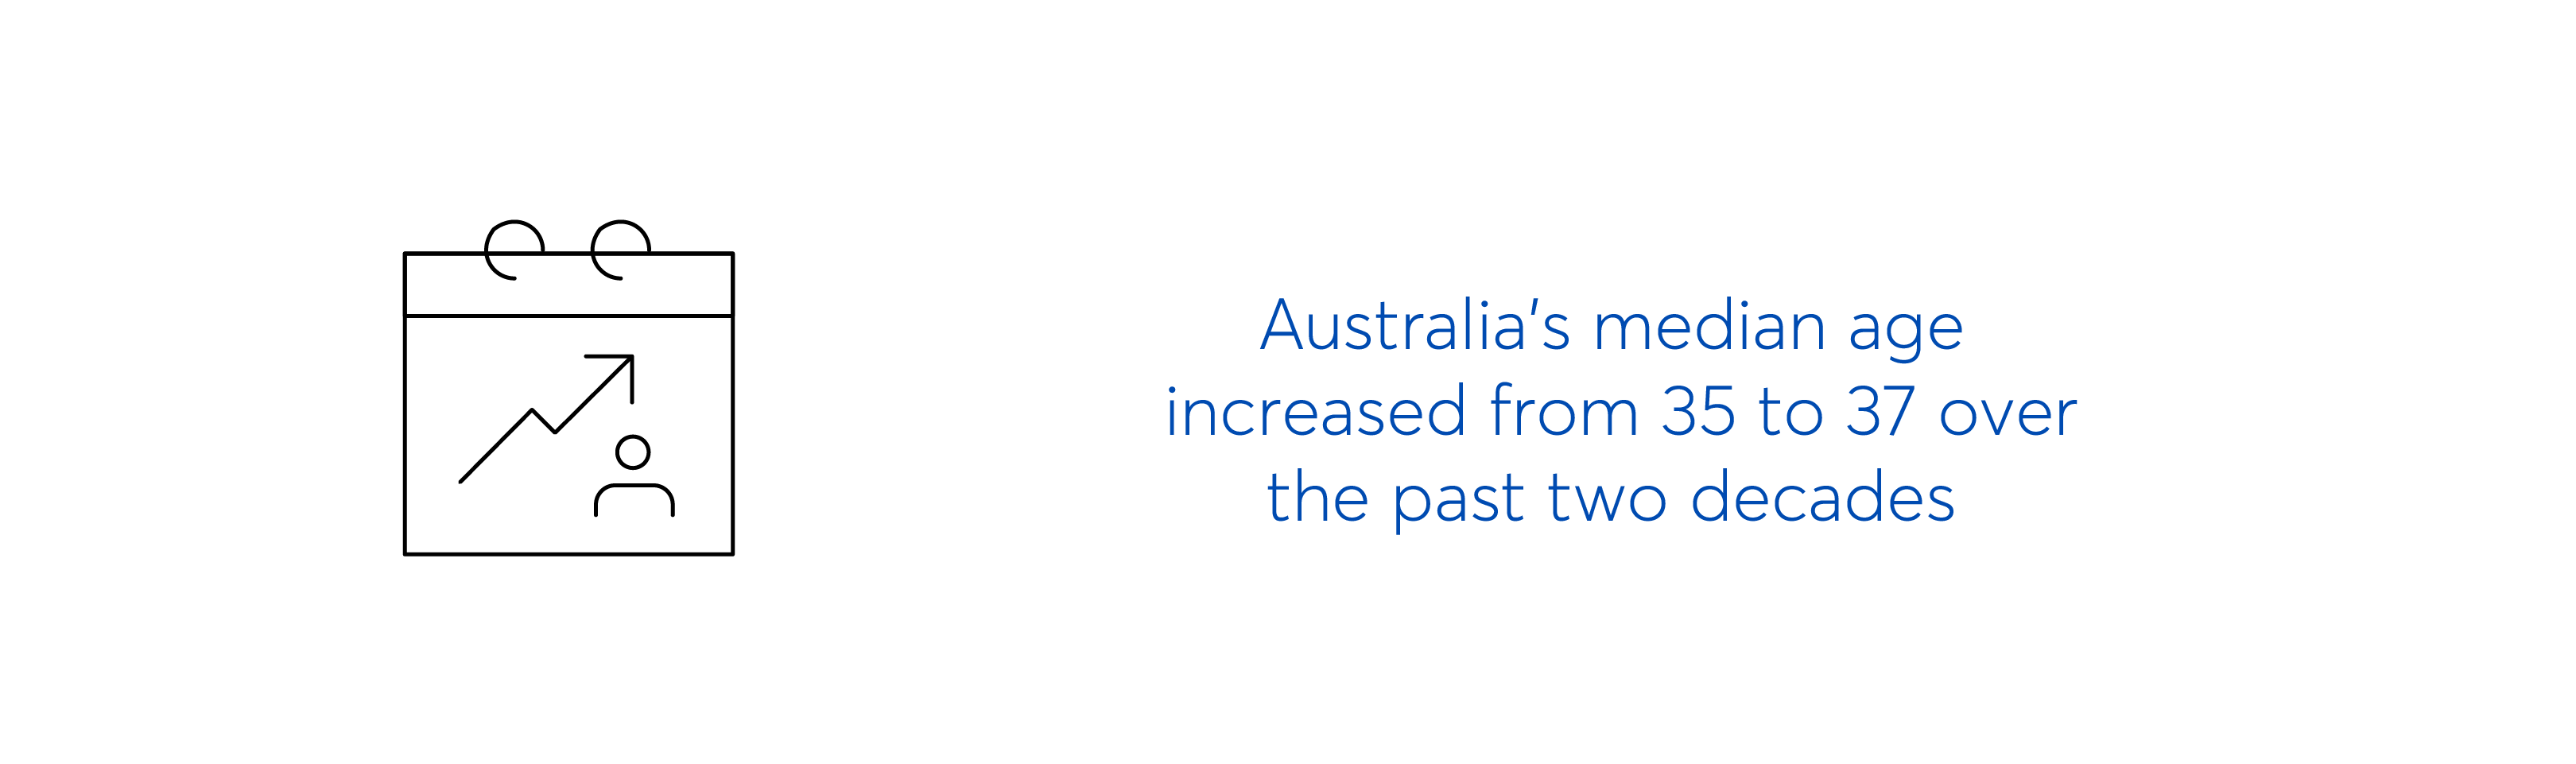 Australia's aging population